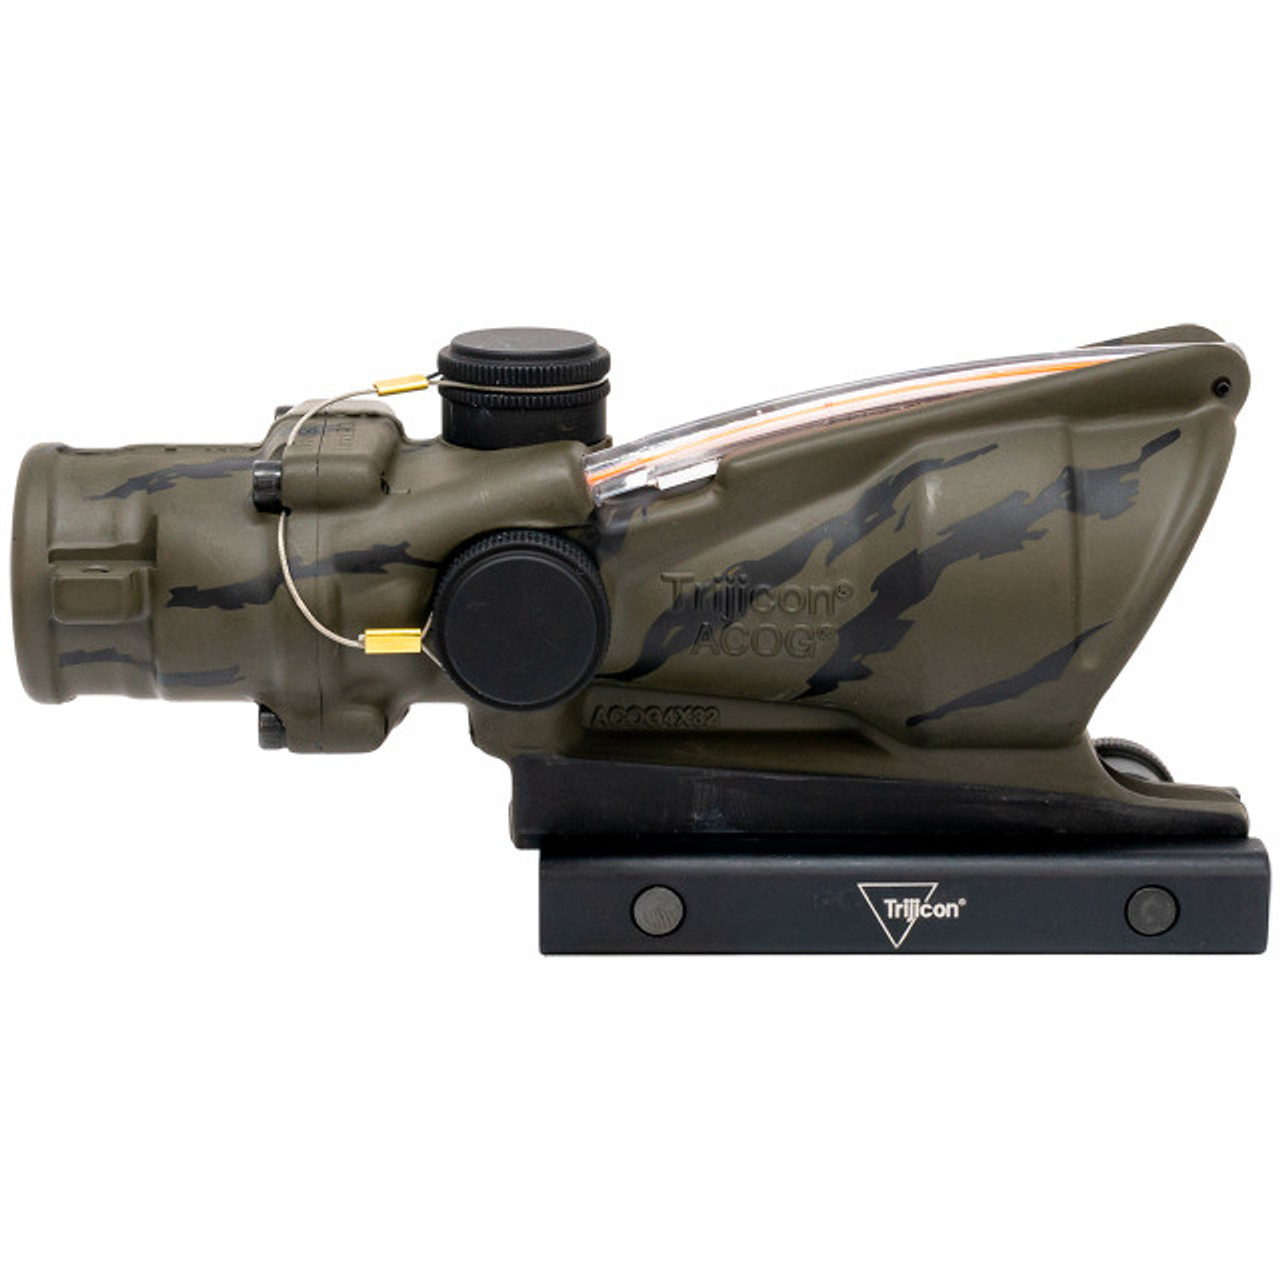 Trijicon ACOG 4x32 BAC Limited Edition Riflescope - .223 / 5.56 BDC